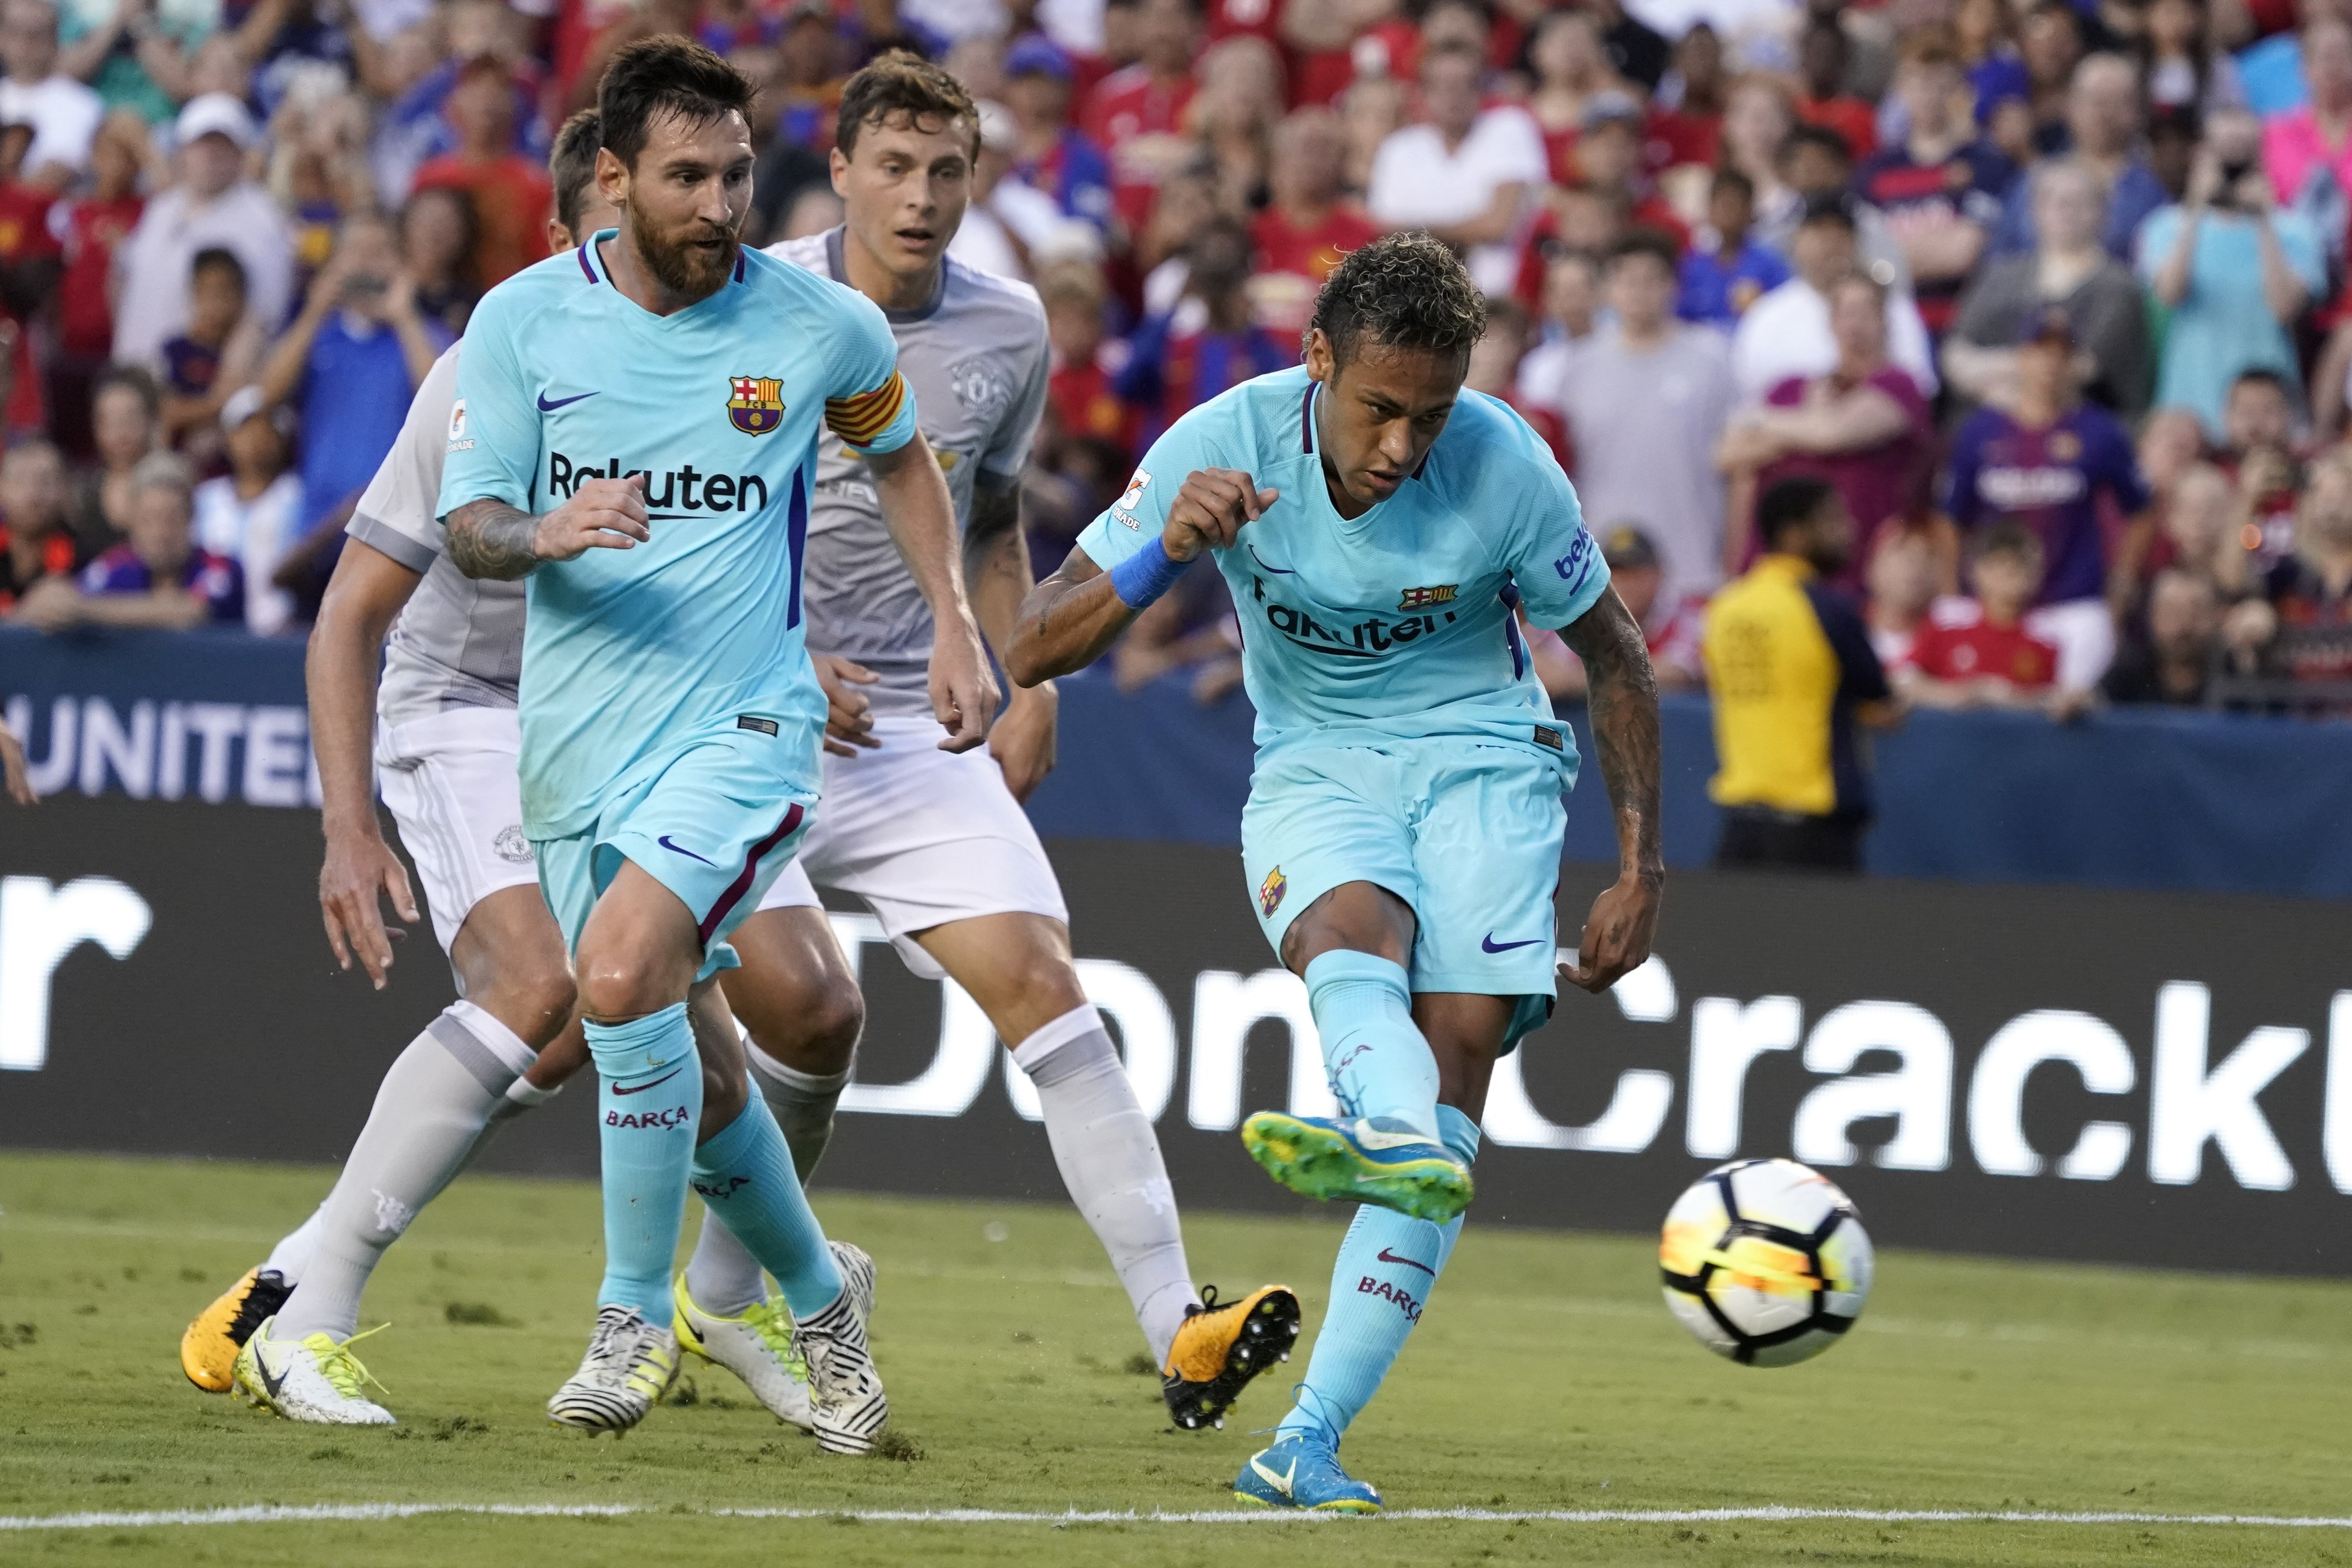 Neymar's idyllic goal gives Barça 1-0 win